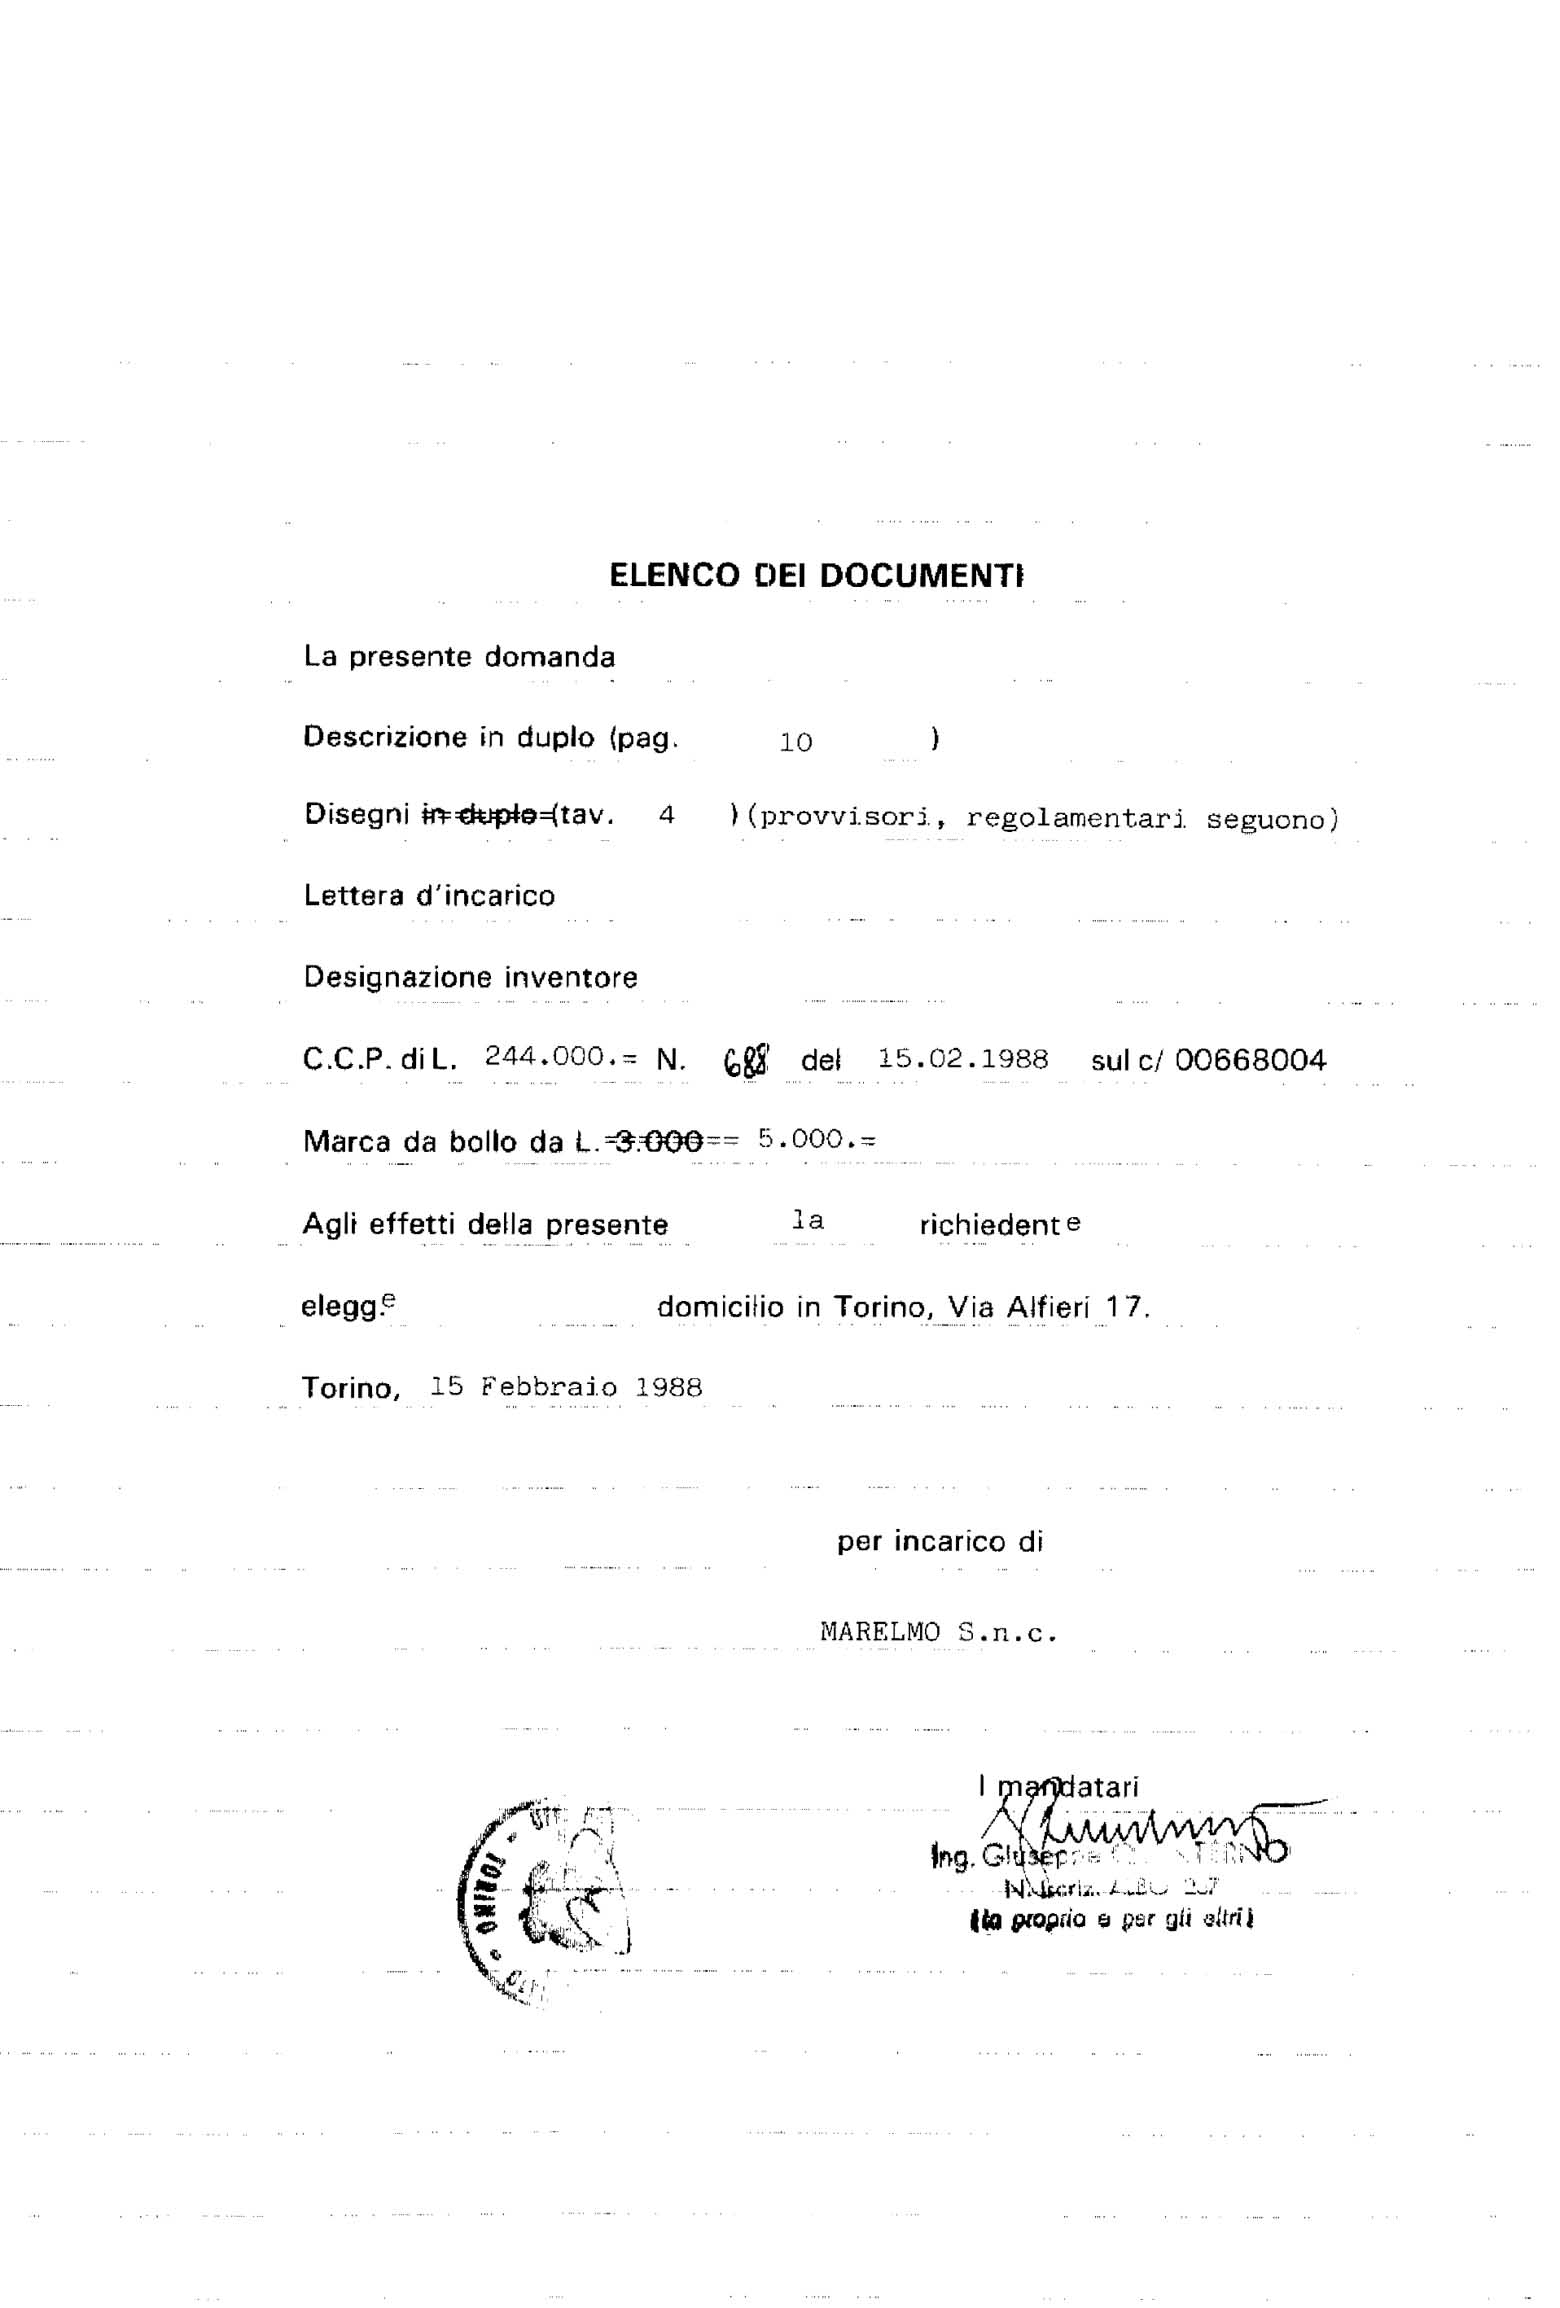 Italian Patent 1,219,021 - Marelmo scan 004 main image